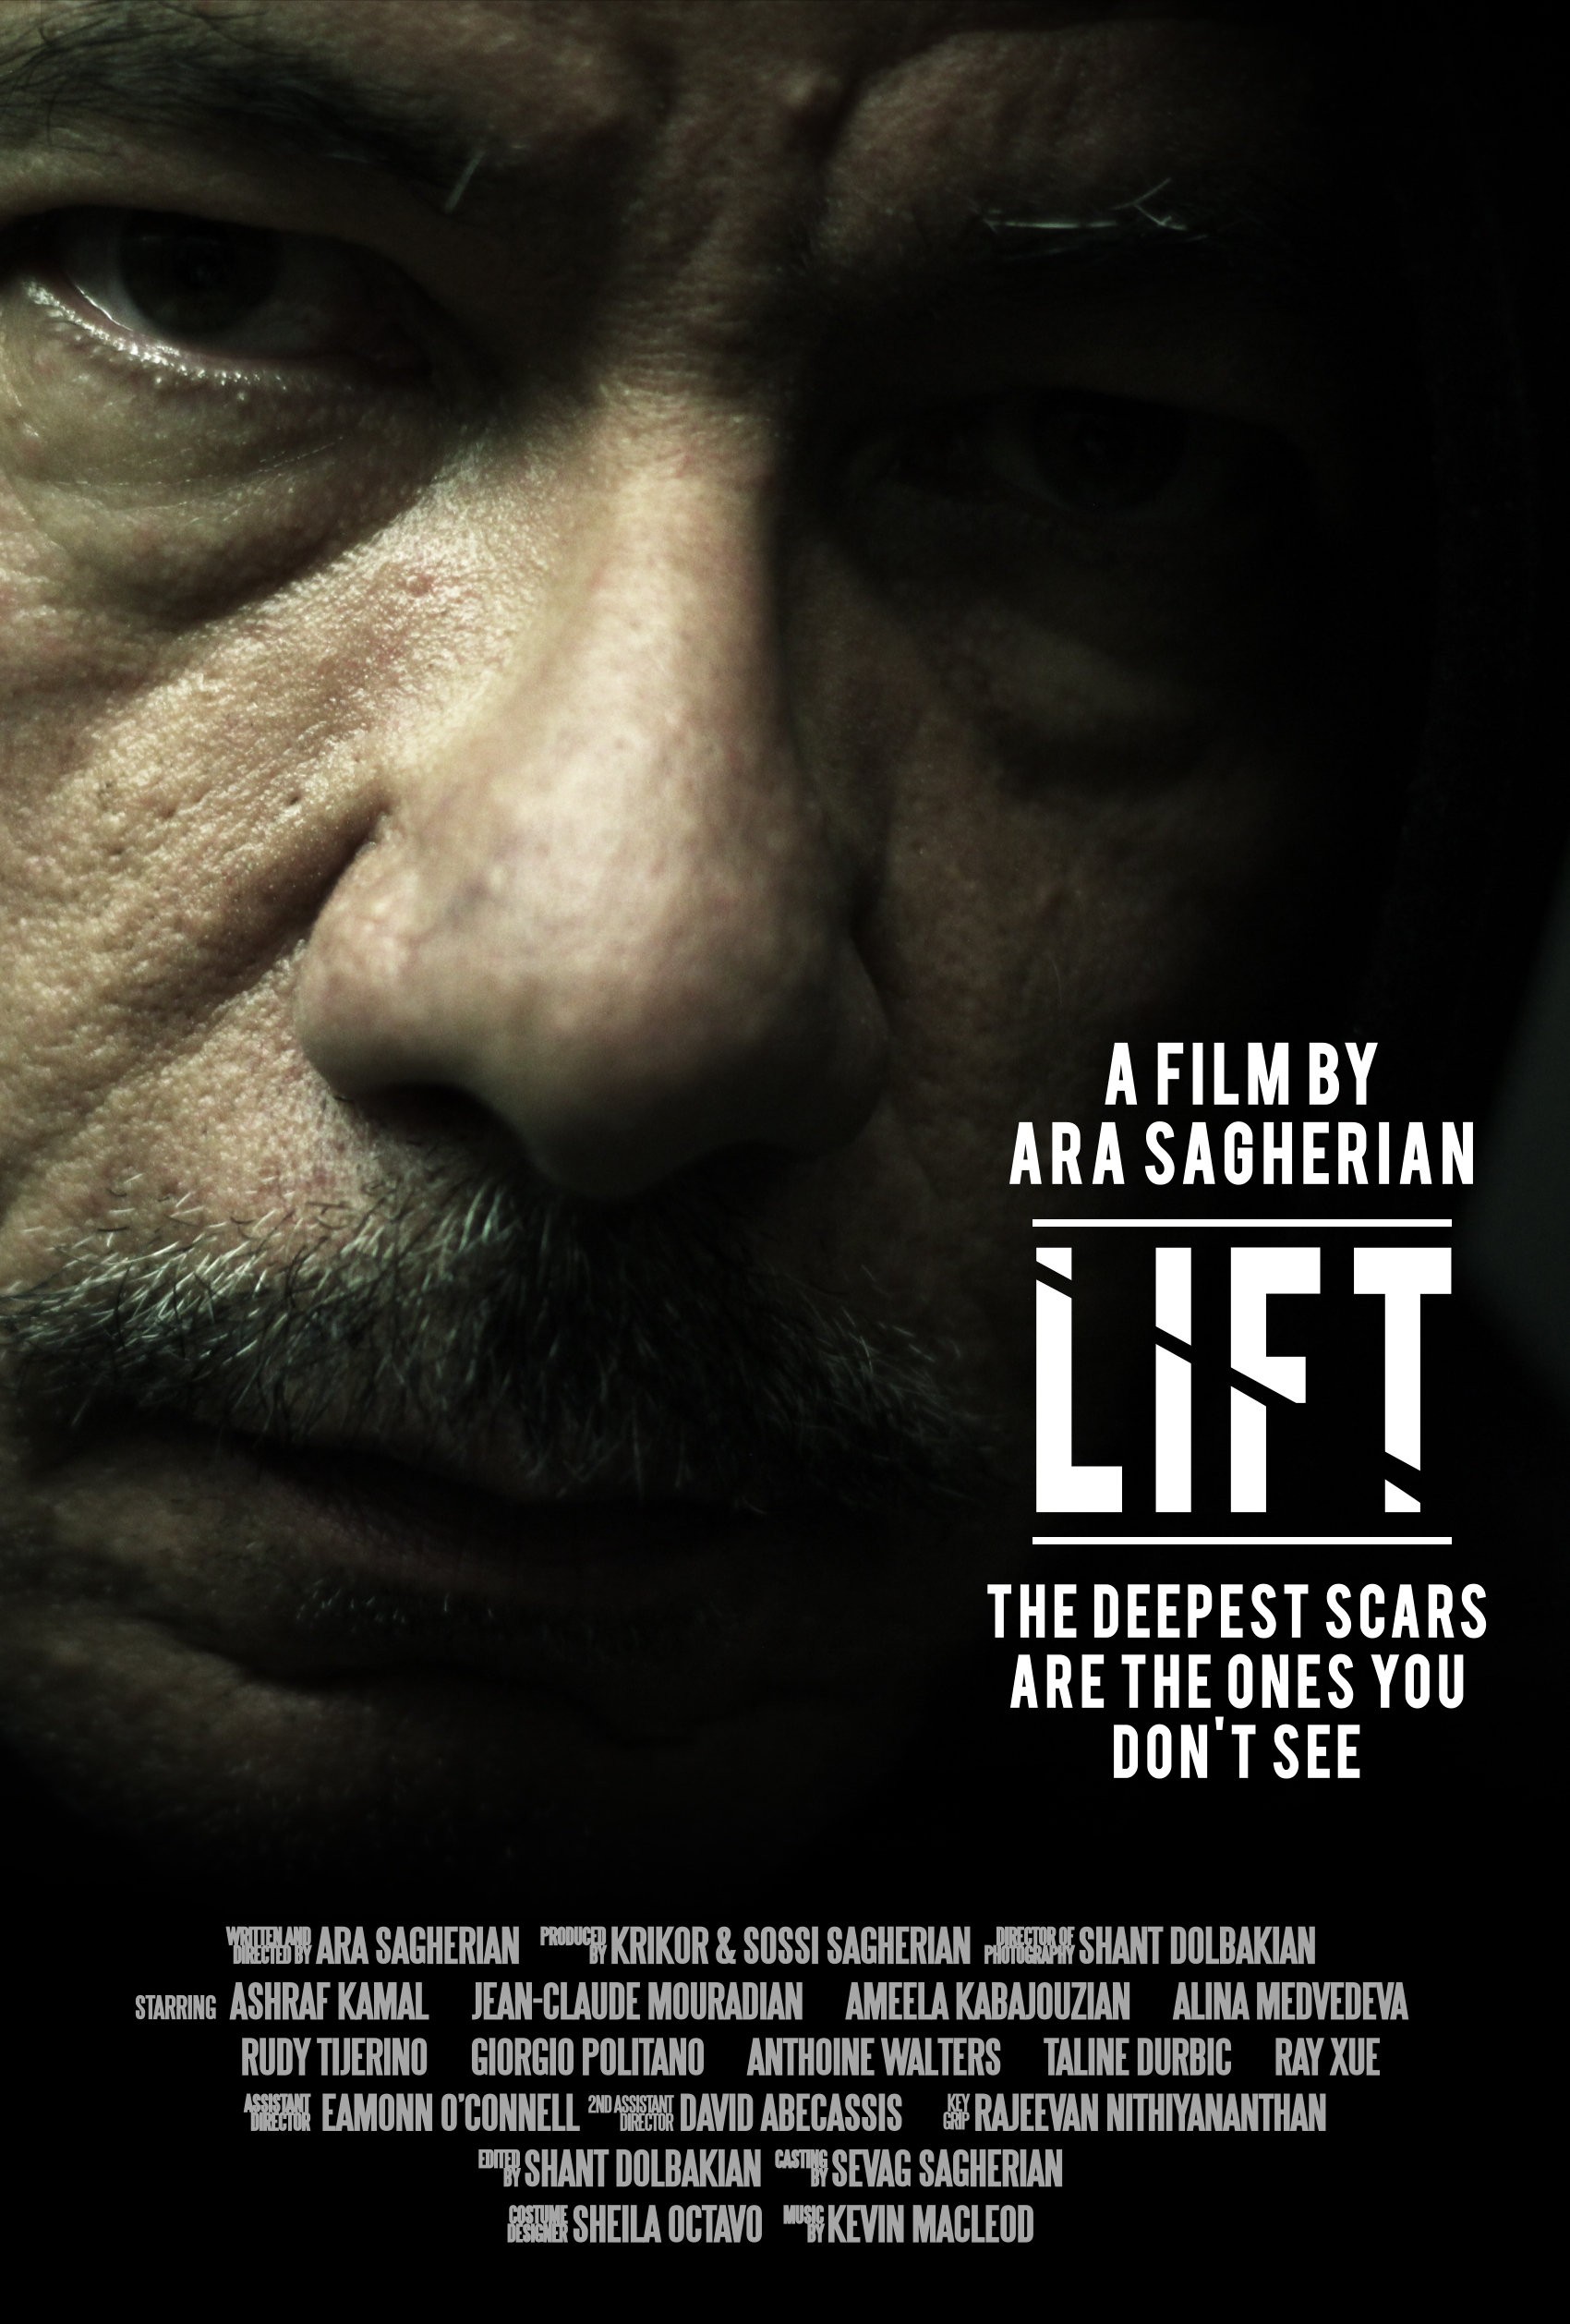 Mega Sized Movie Poster Image for Lift